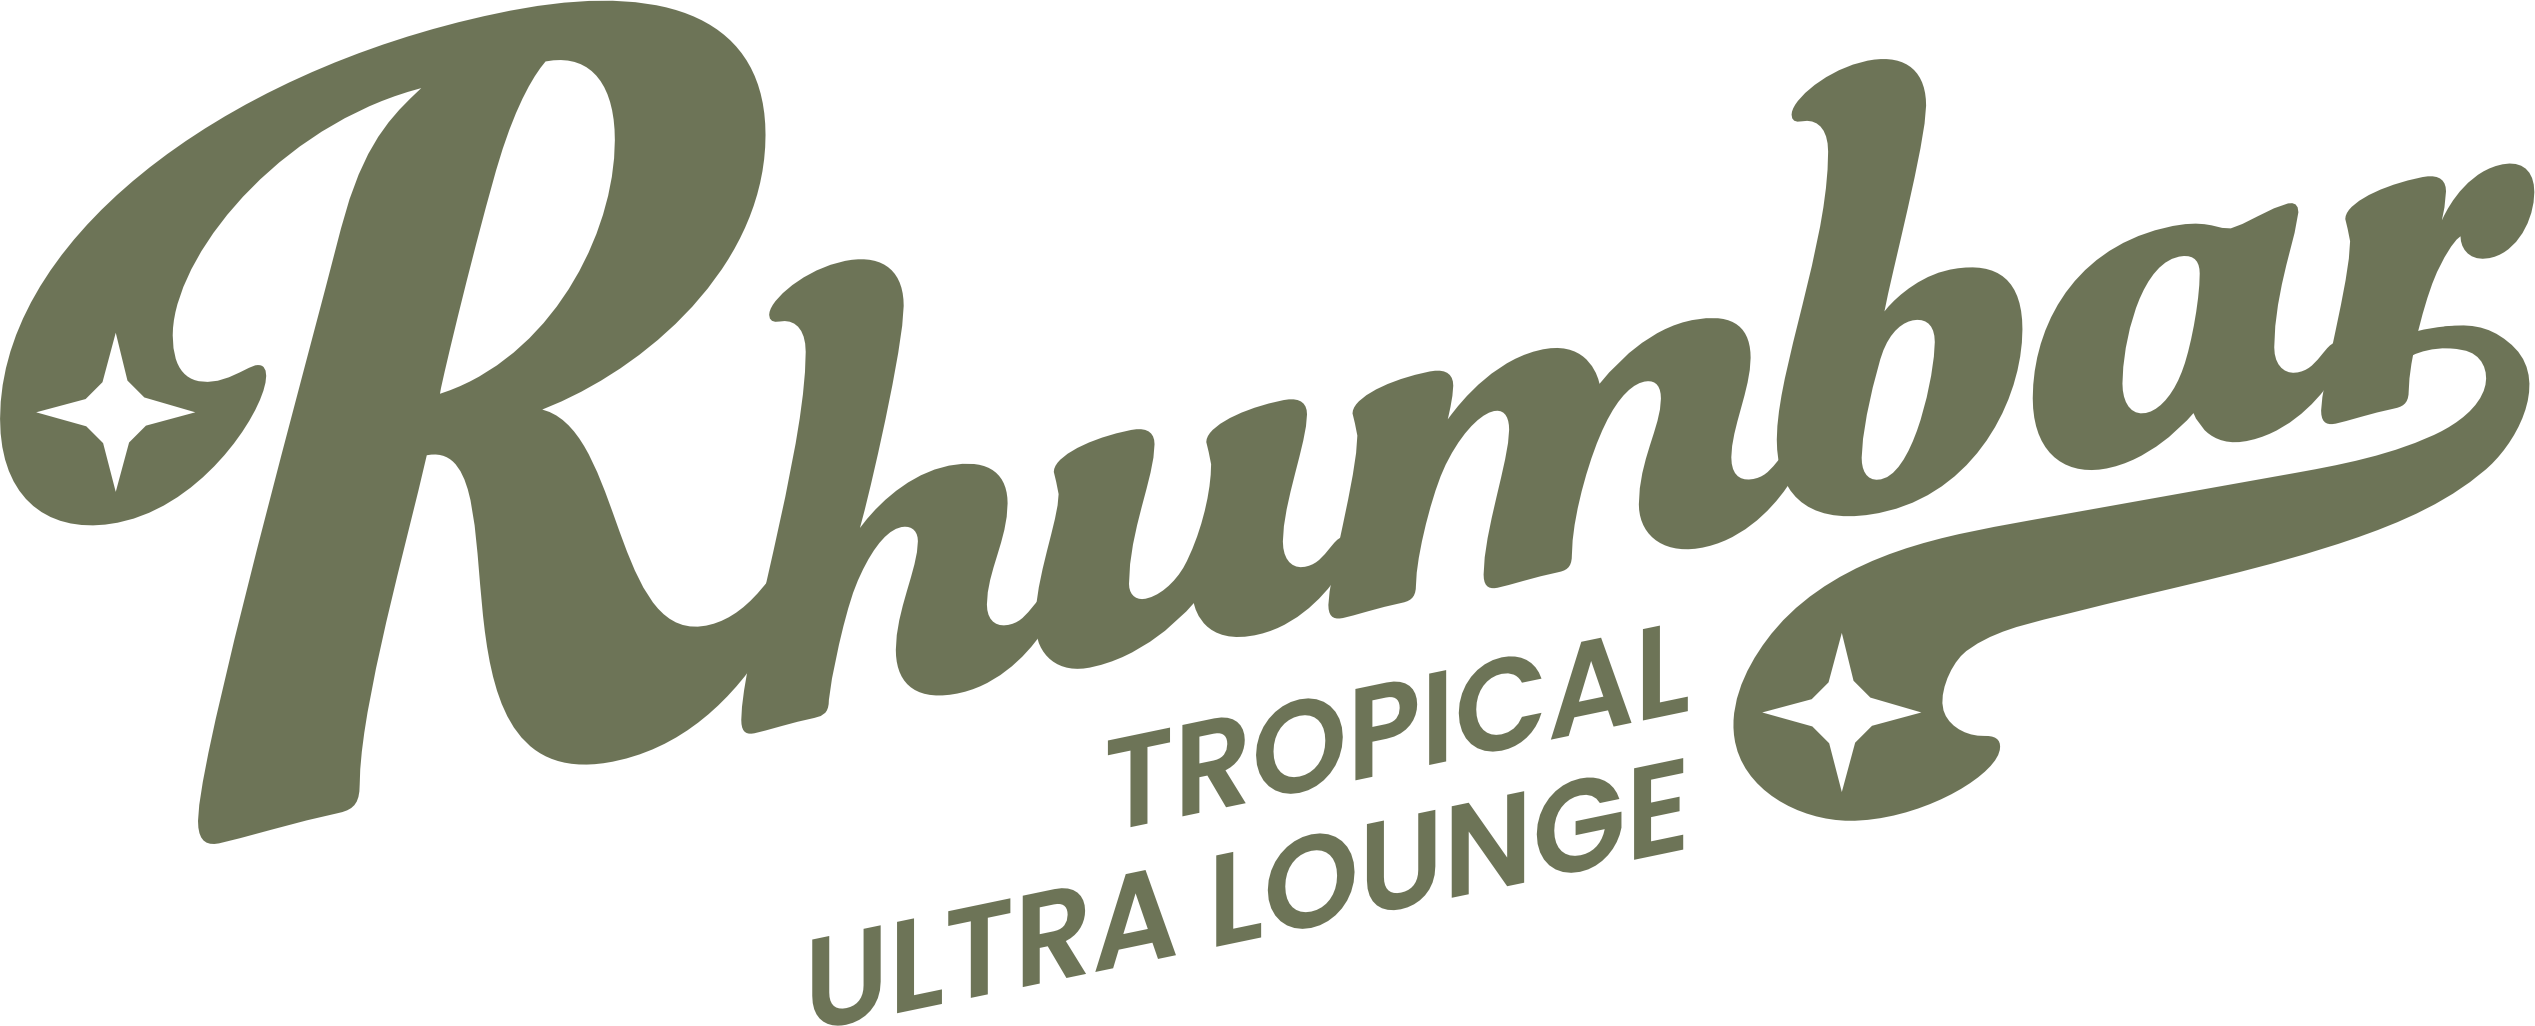 Rhumbar - site logo